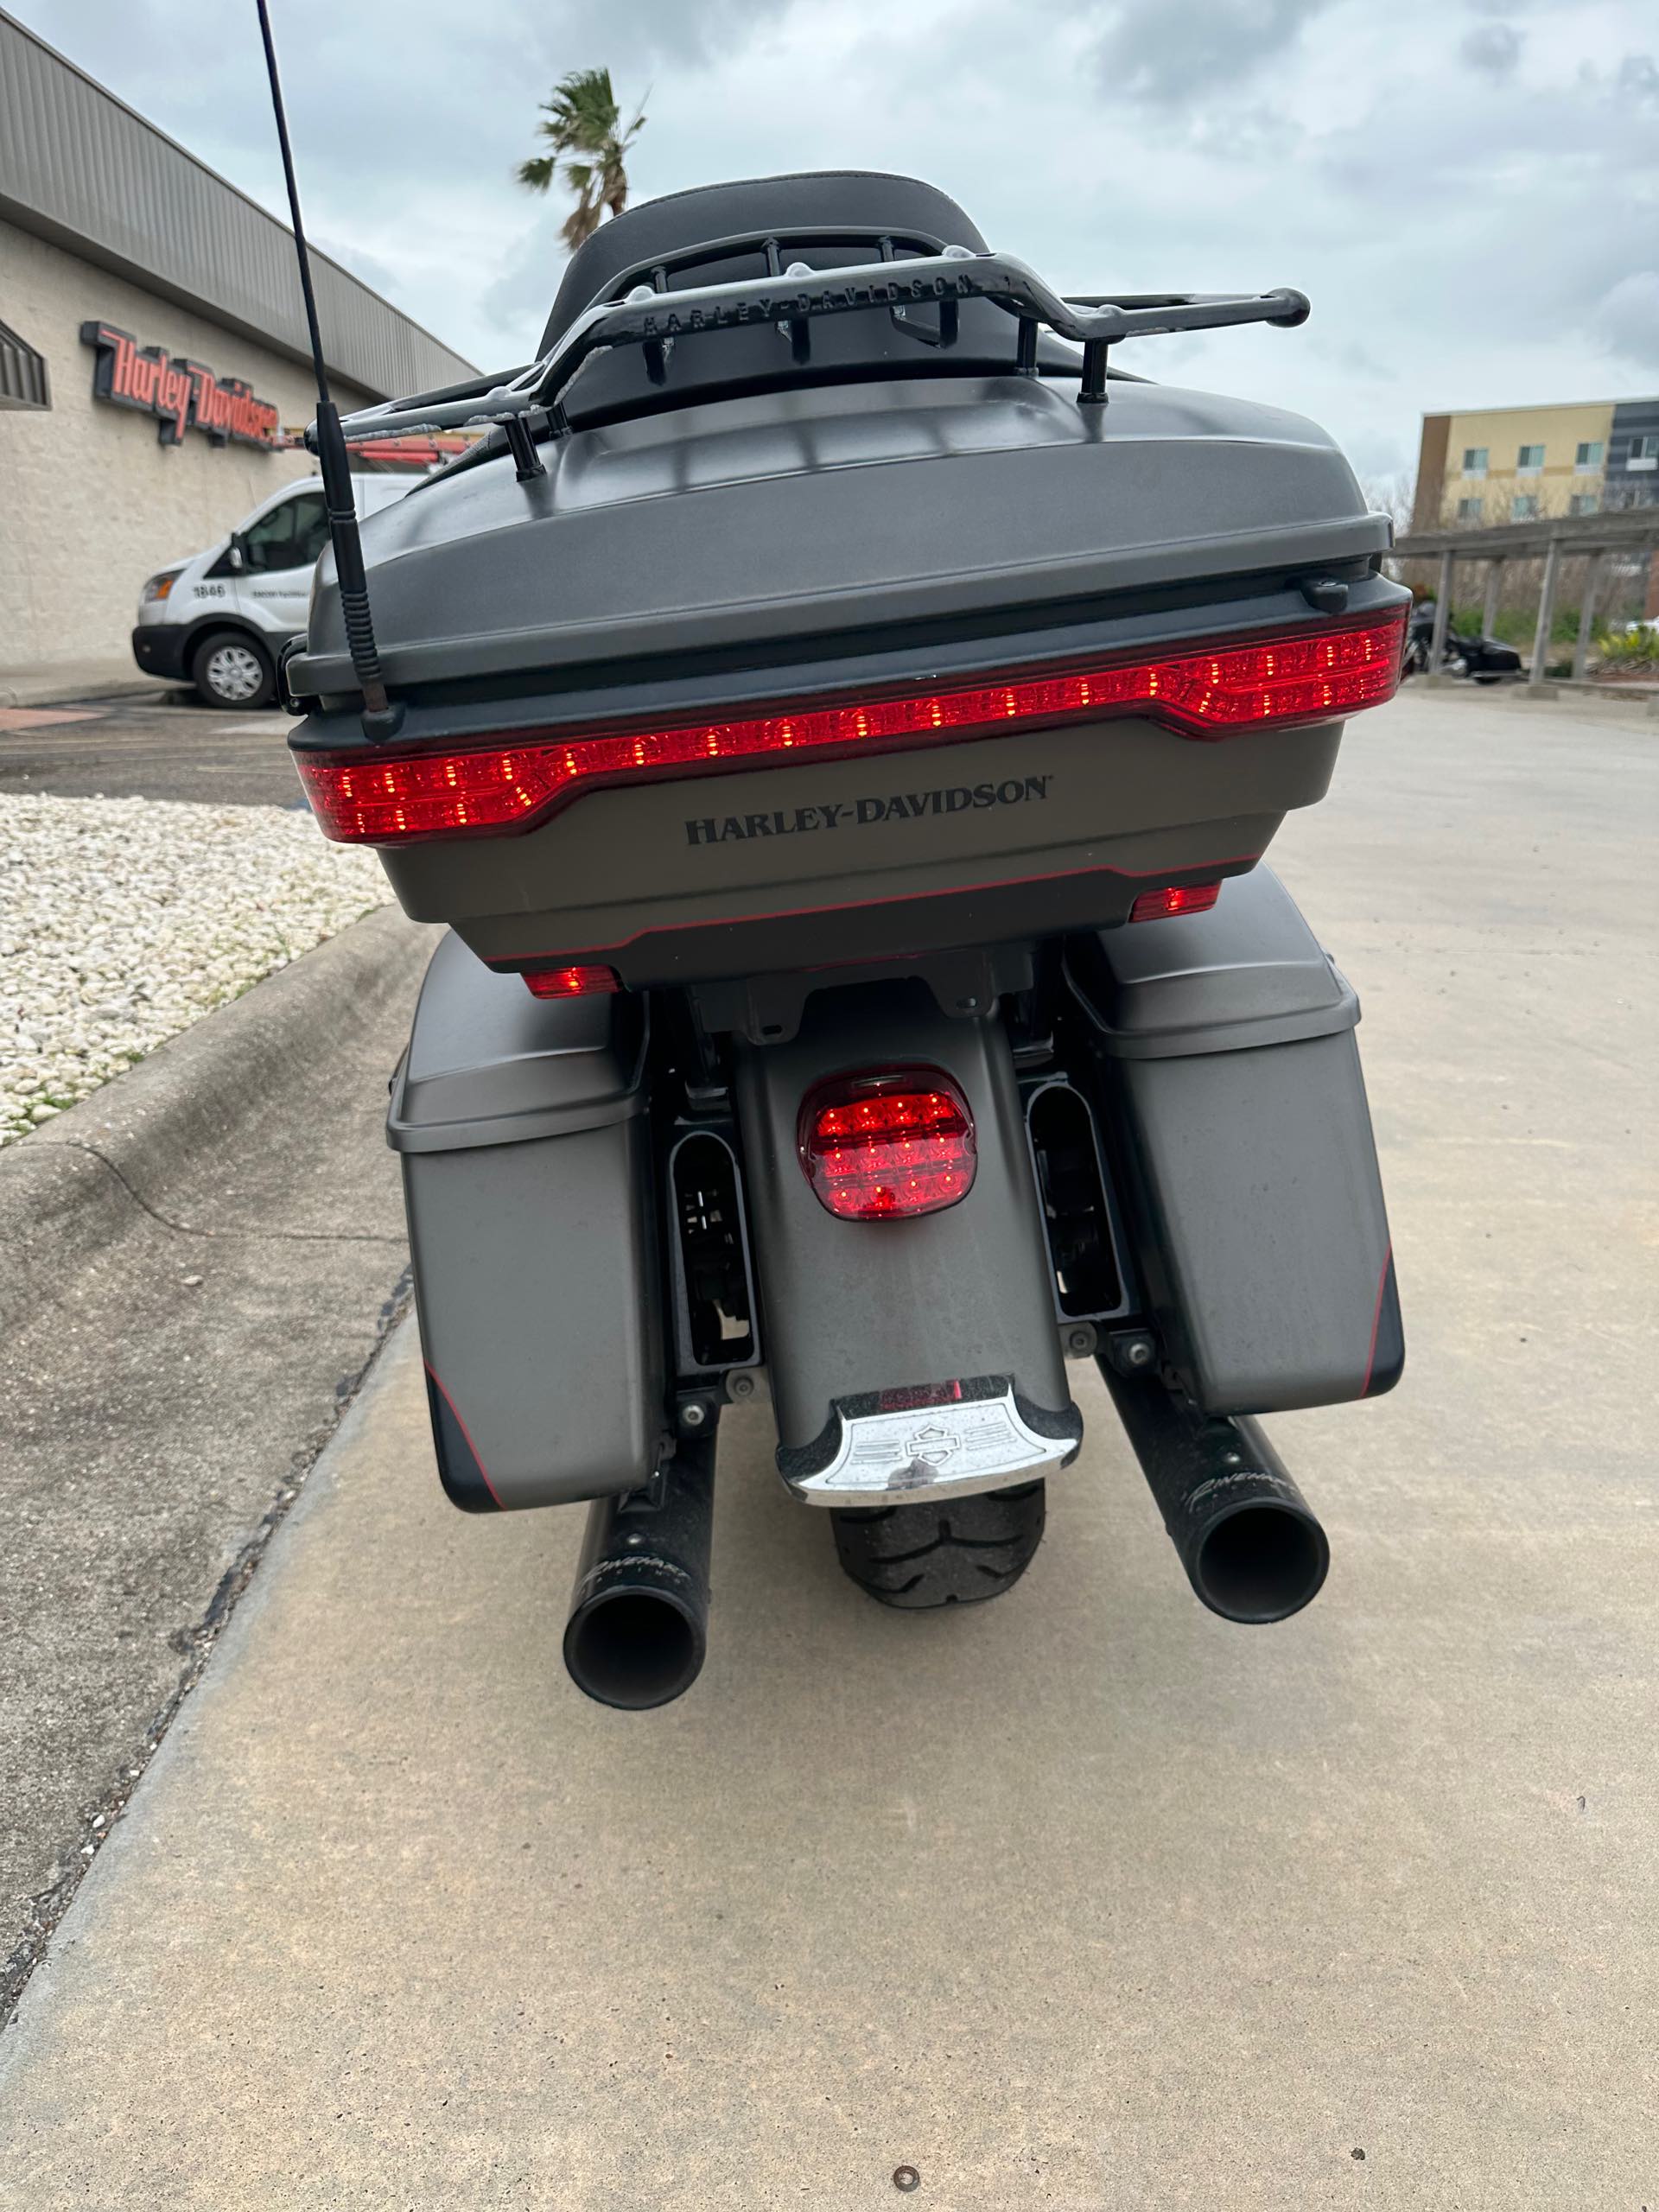 2019 Harley-Davidson Electra Glide Ultra Limited Low at Corpus Christi Harley Davidson